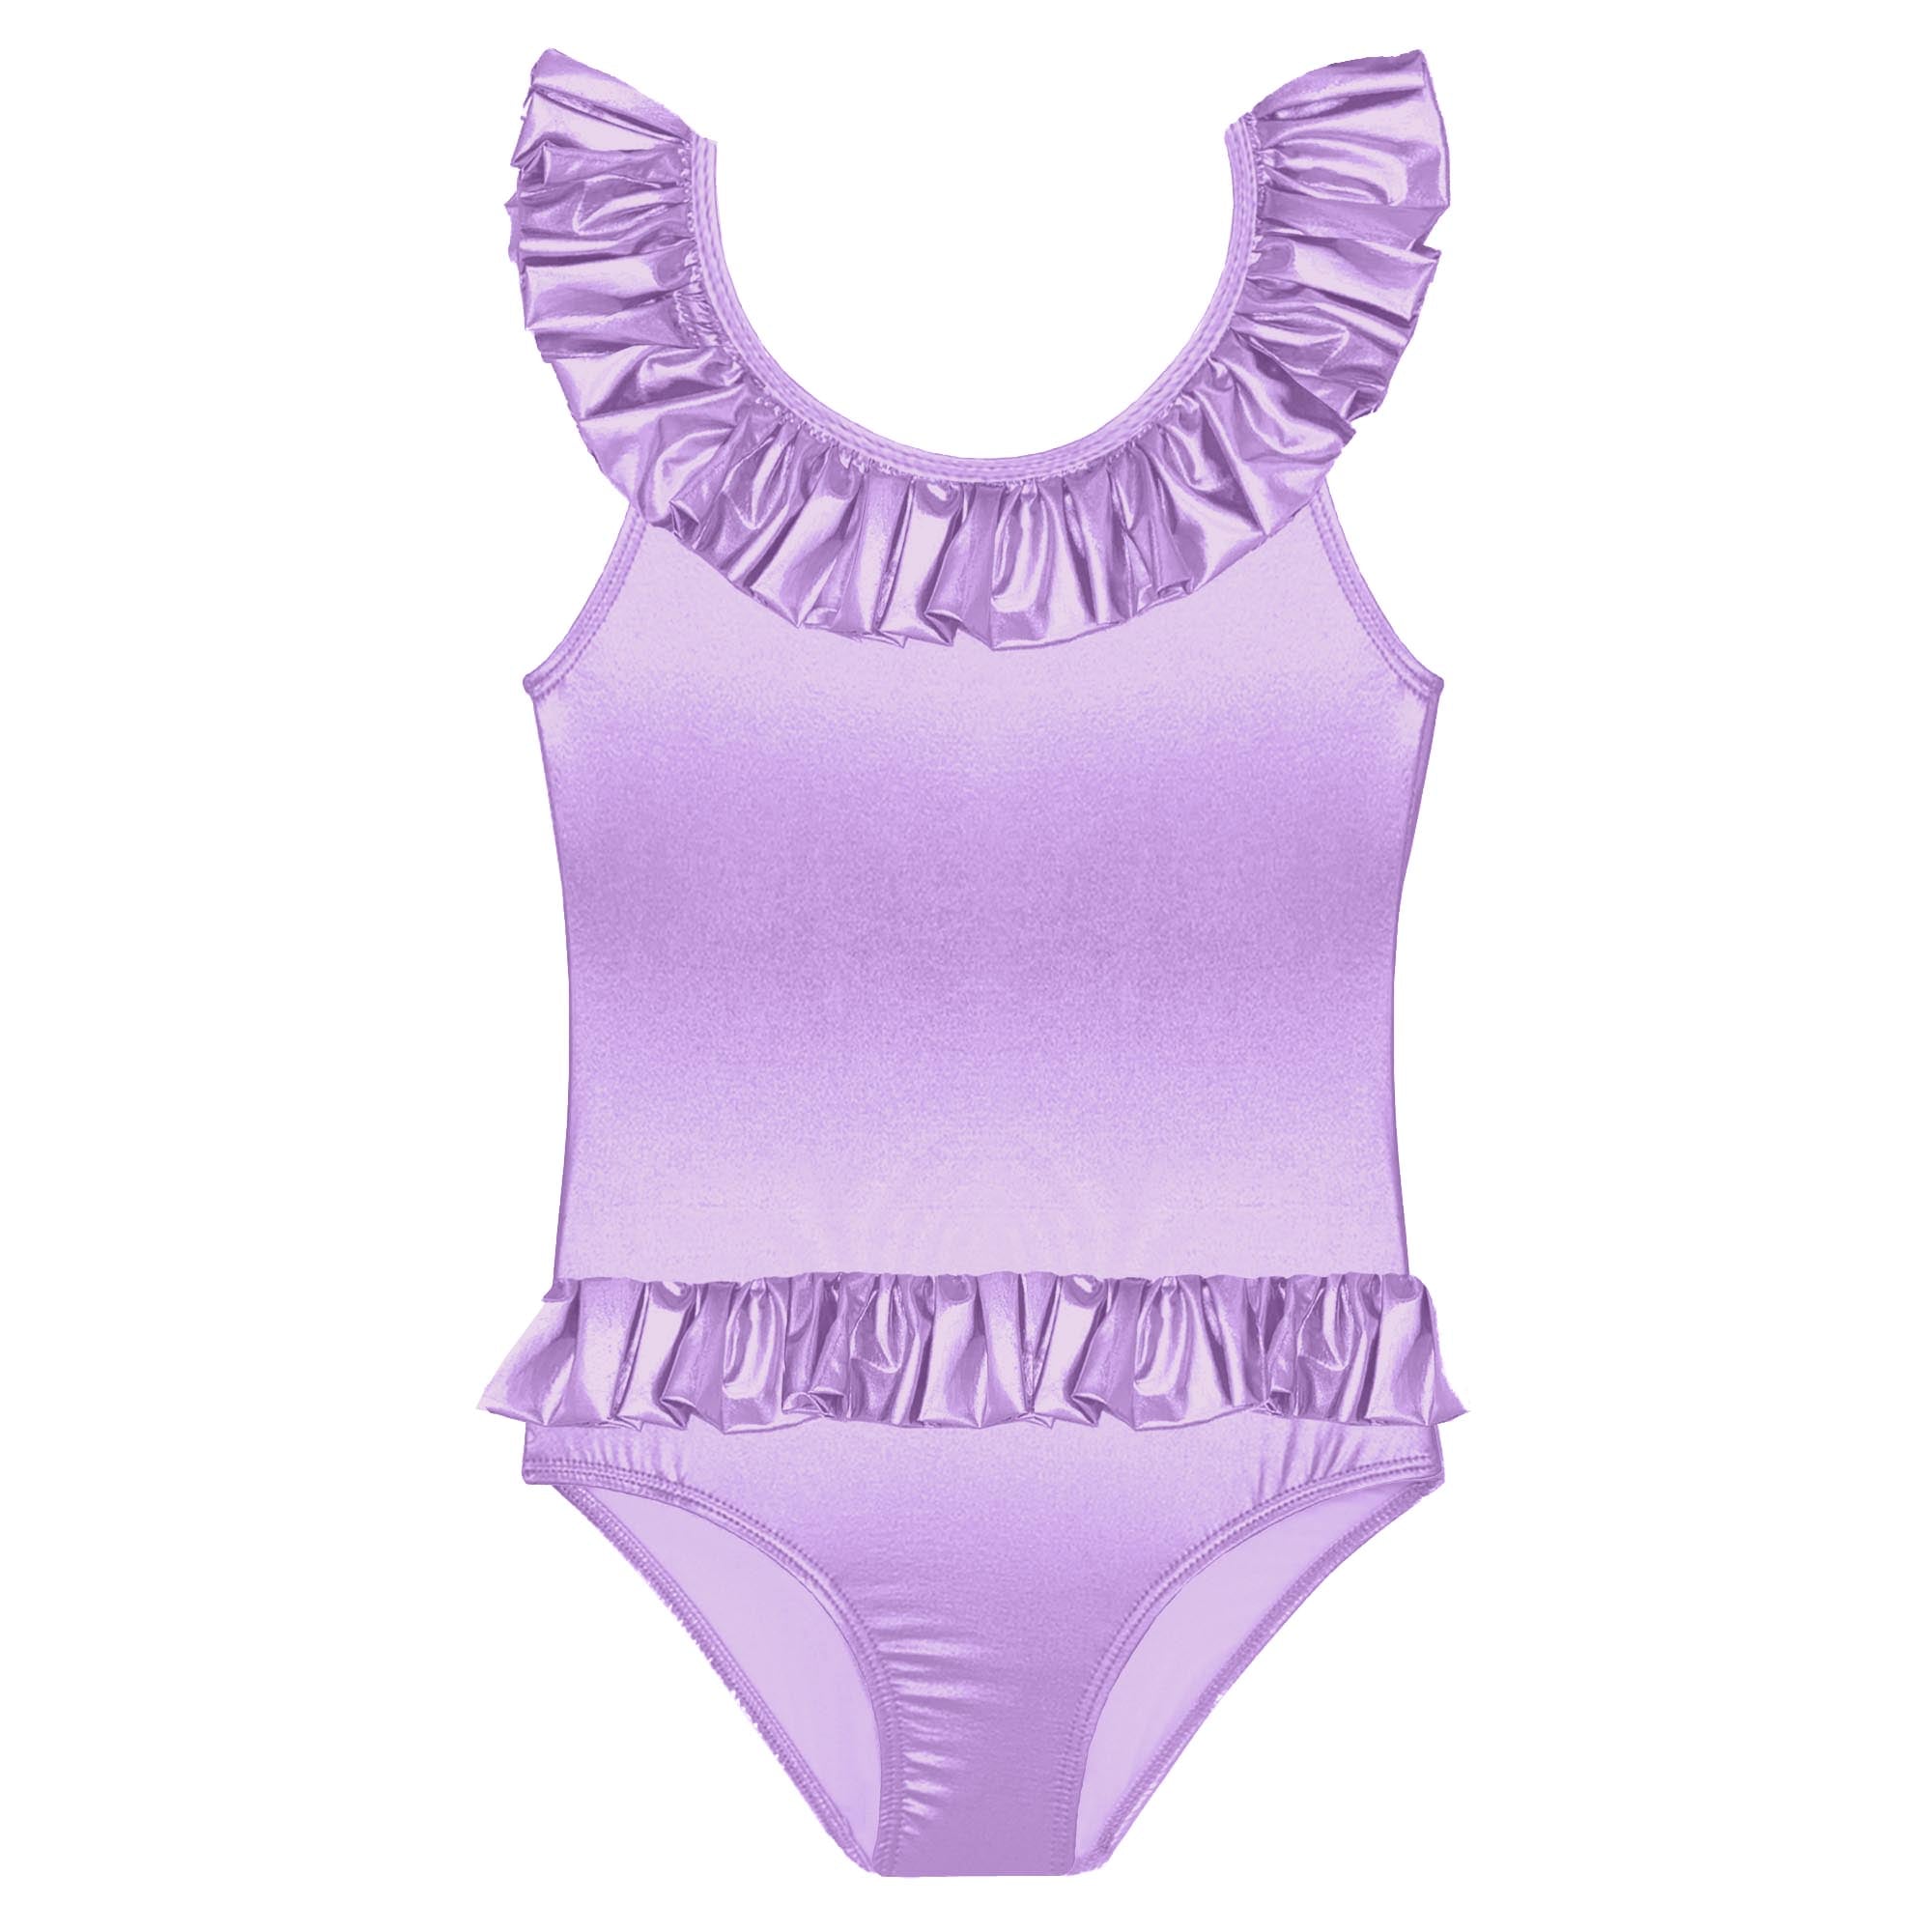 Girls' swimsuit, iridescent lilac